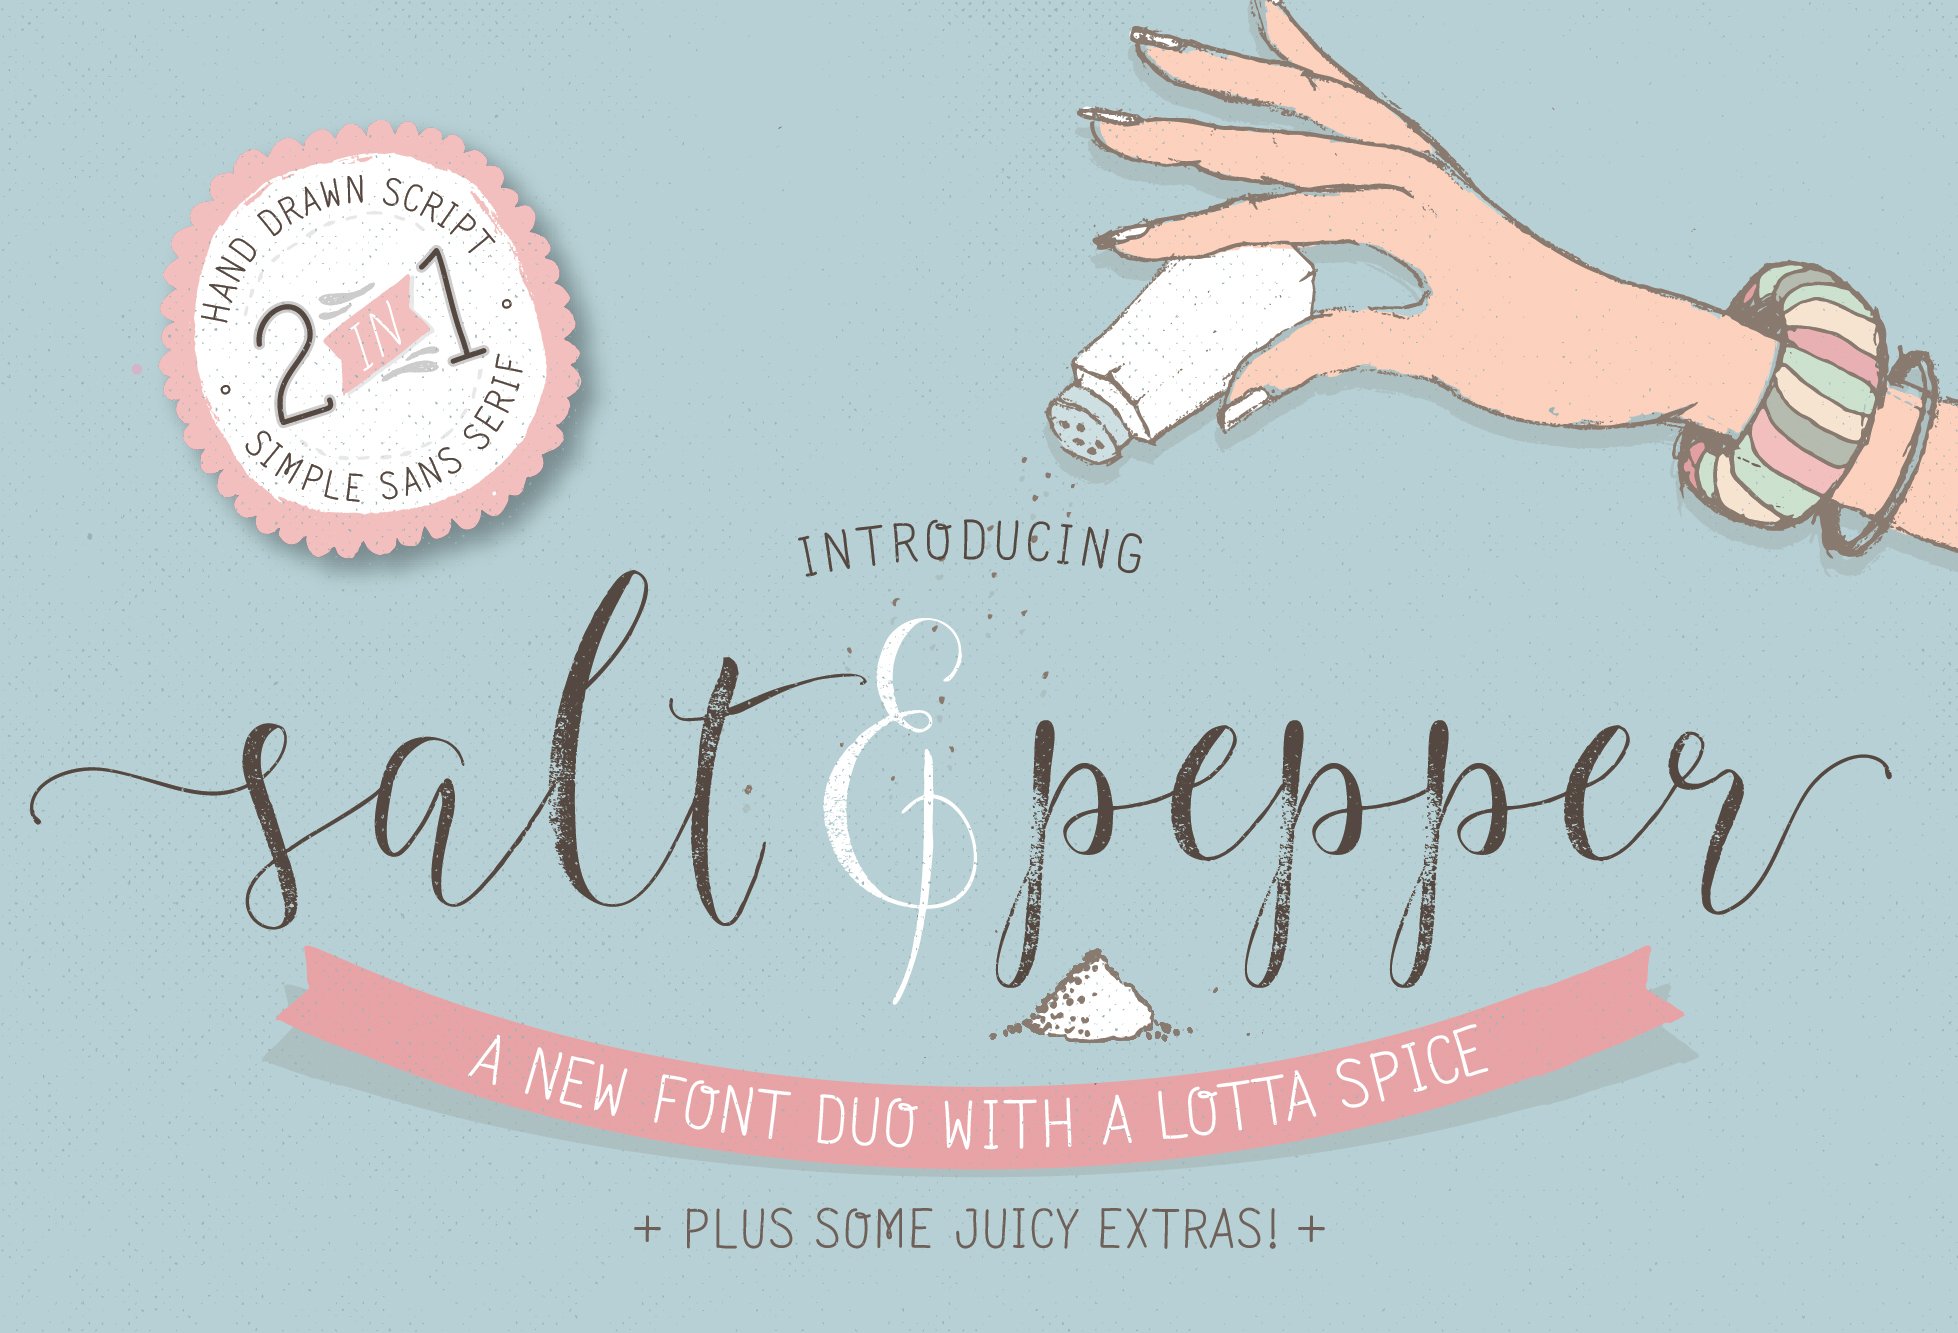 Salt & Pepper font duo cover image.